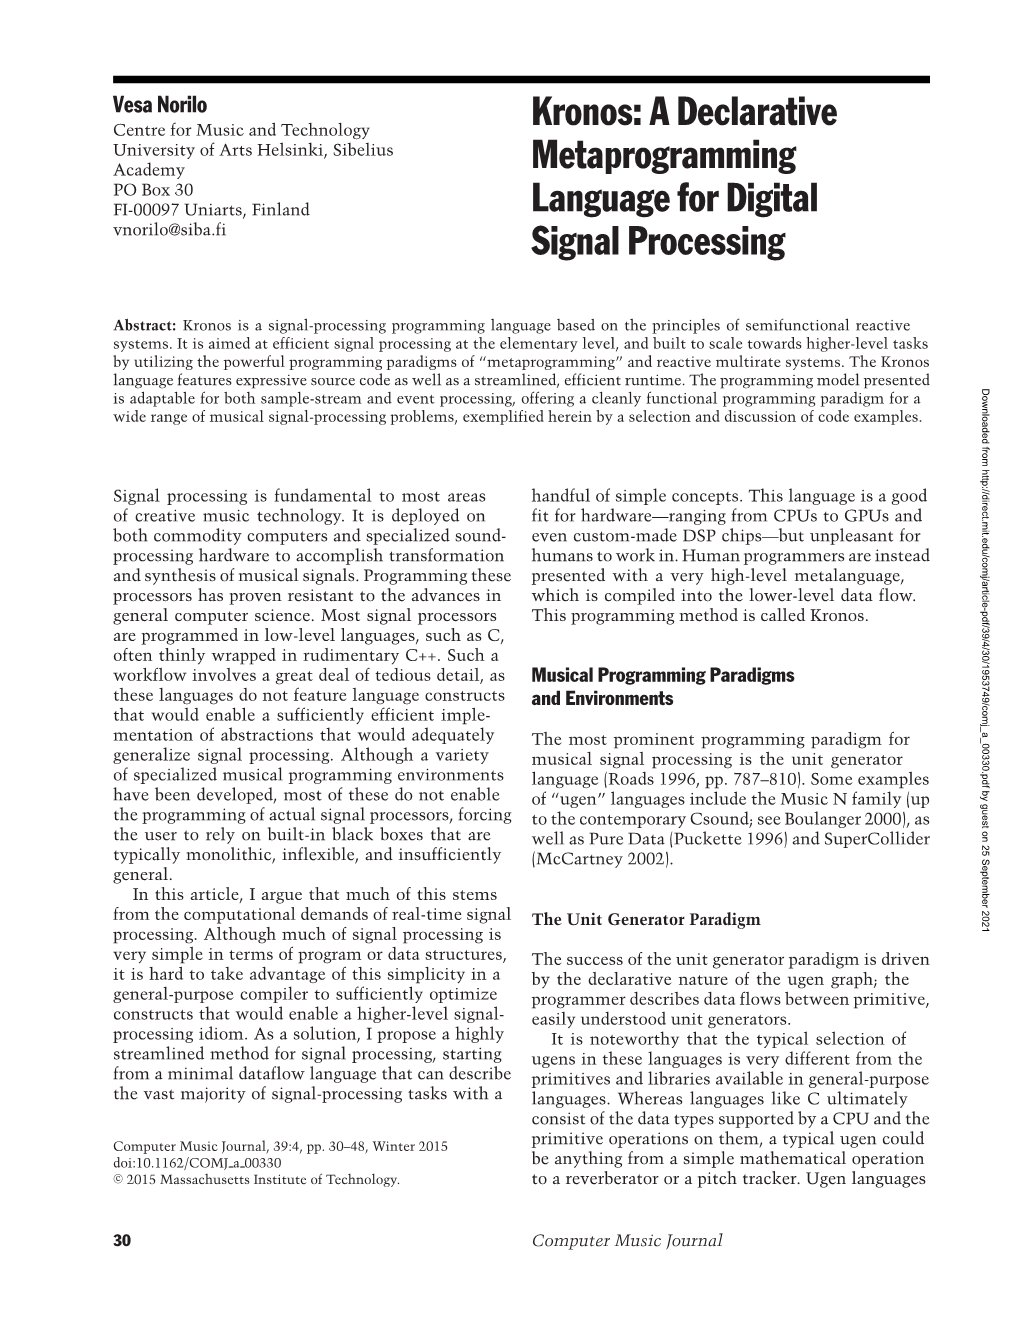 A Declarative Metaprogramming Language for Digital Signal